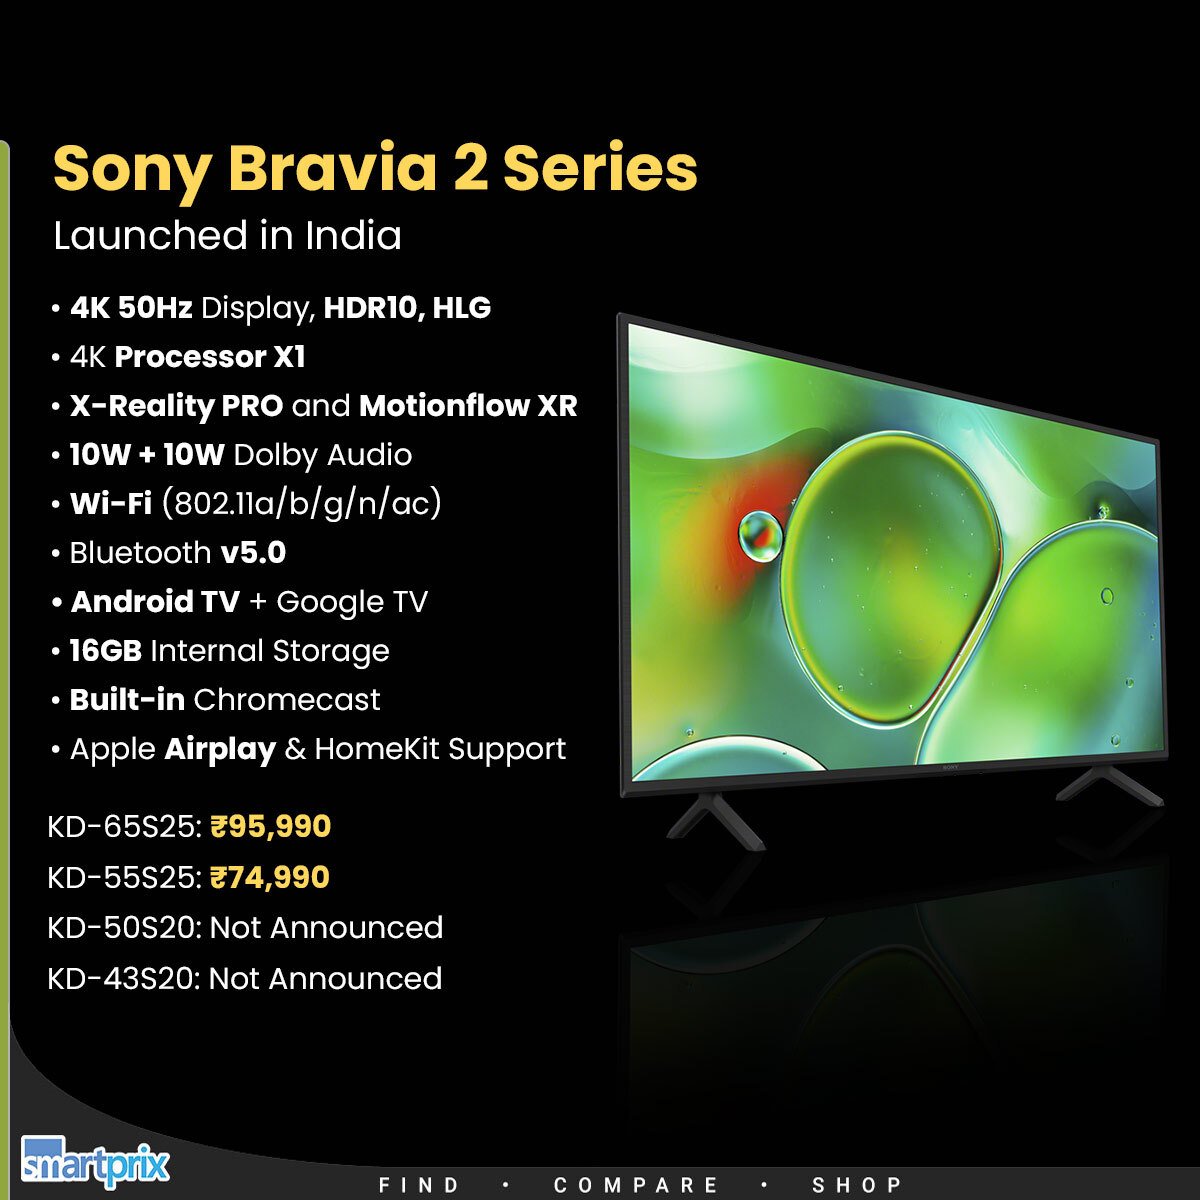 Sony India launches new Bravia 2 series TVs with 4K Ultra HD Technology #Sony #SonyBravia2Series #Sony4KTV